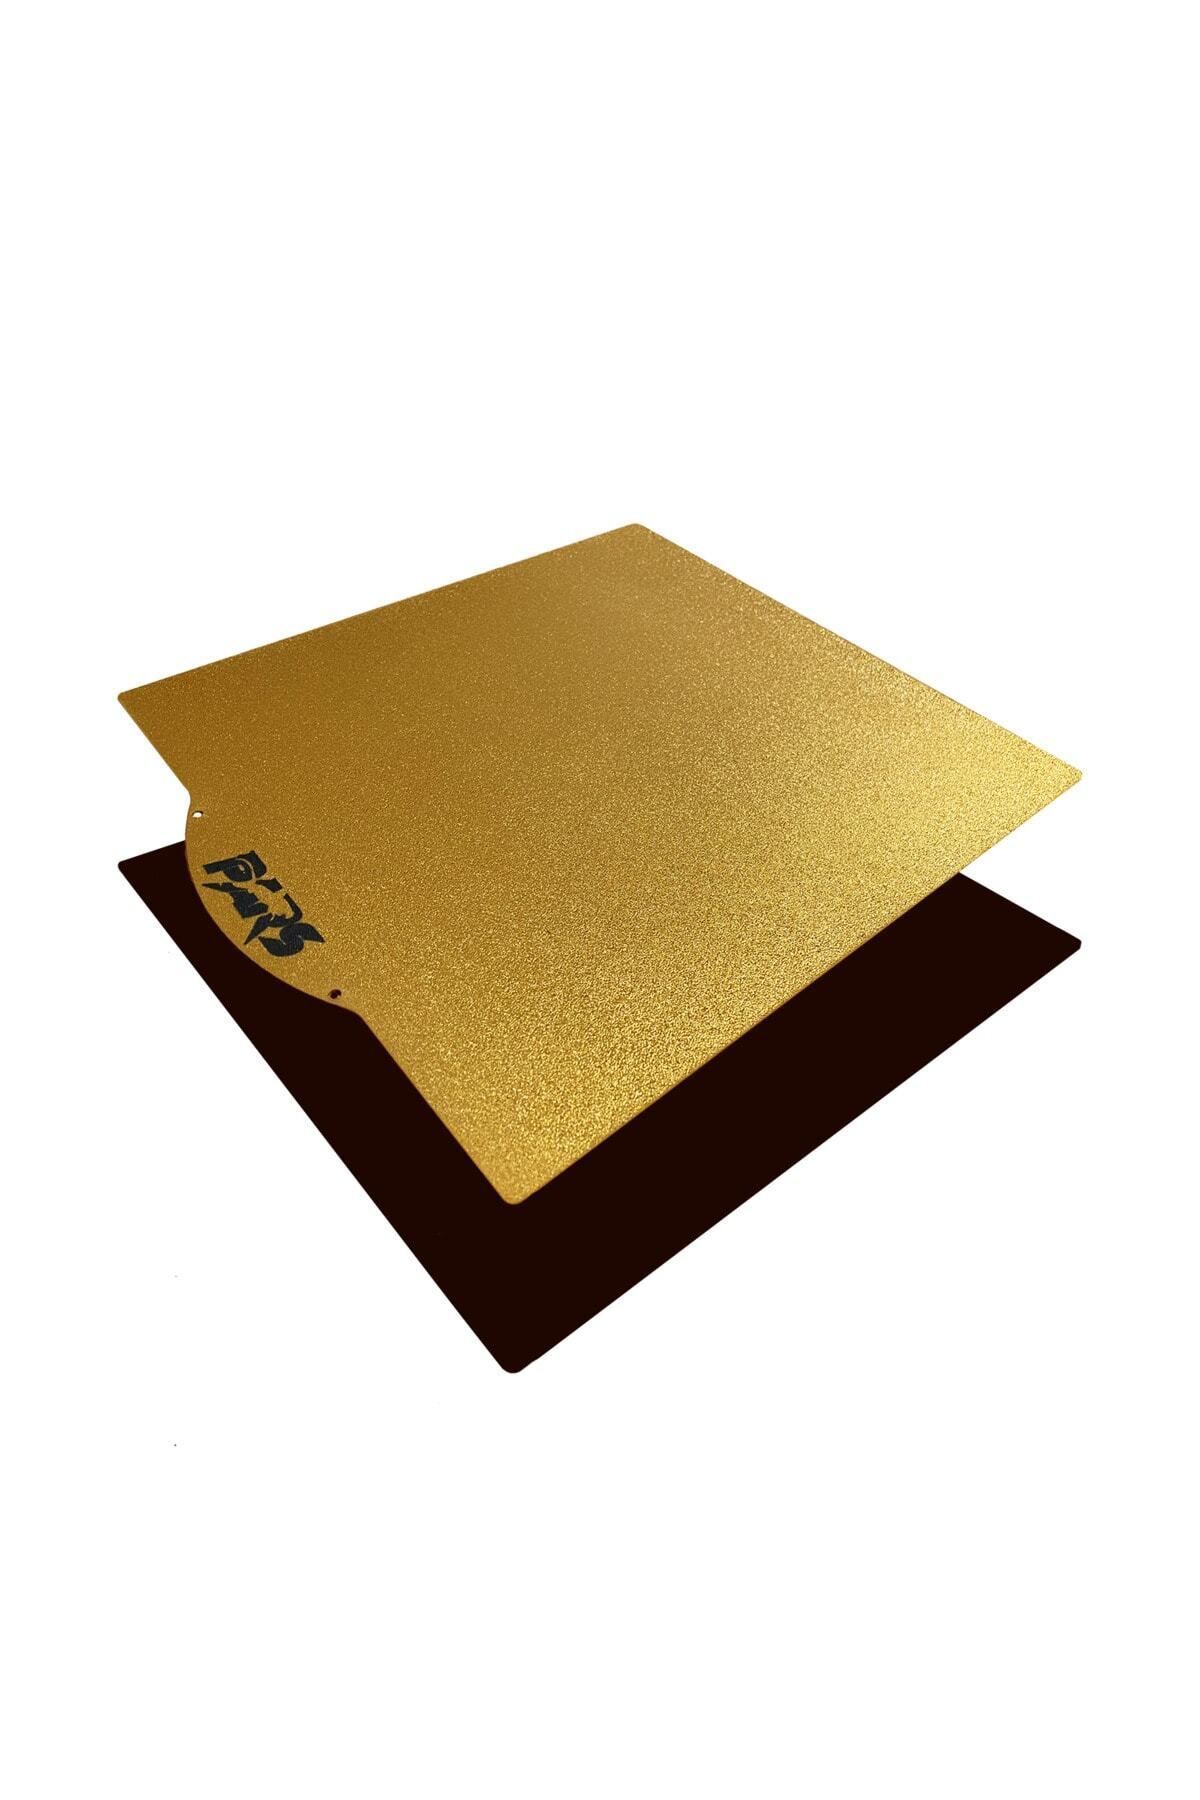 Pars 245x255 Mm Gold Pei Kaplı Özel Yay Çeliği Tabla Magnetli